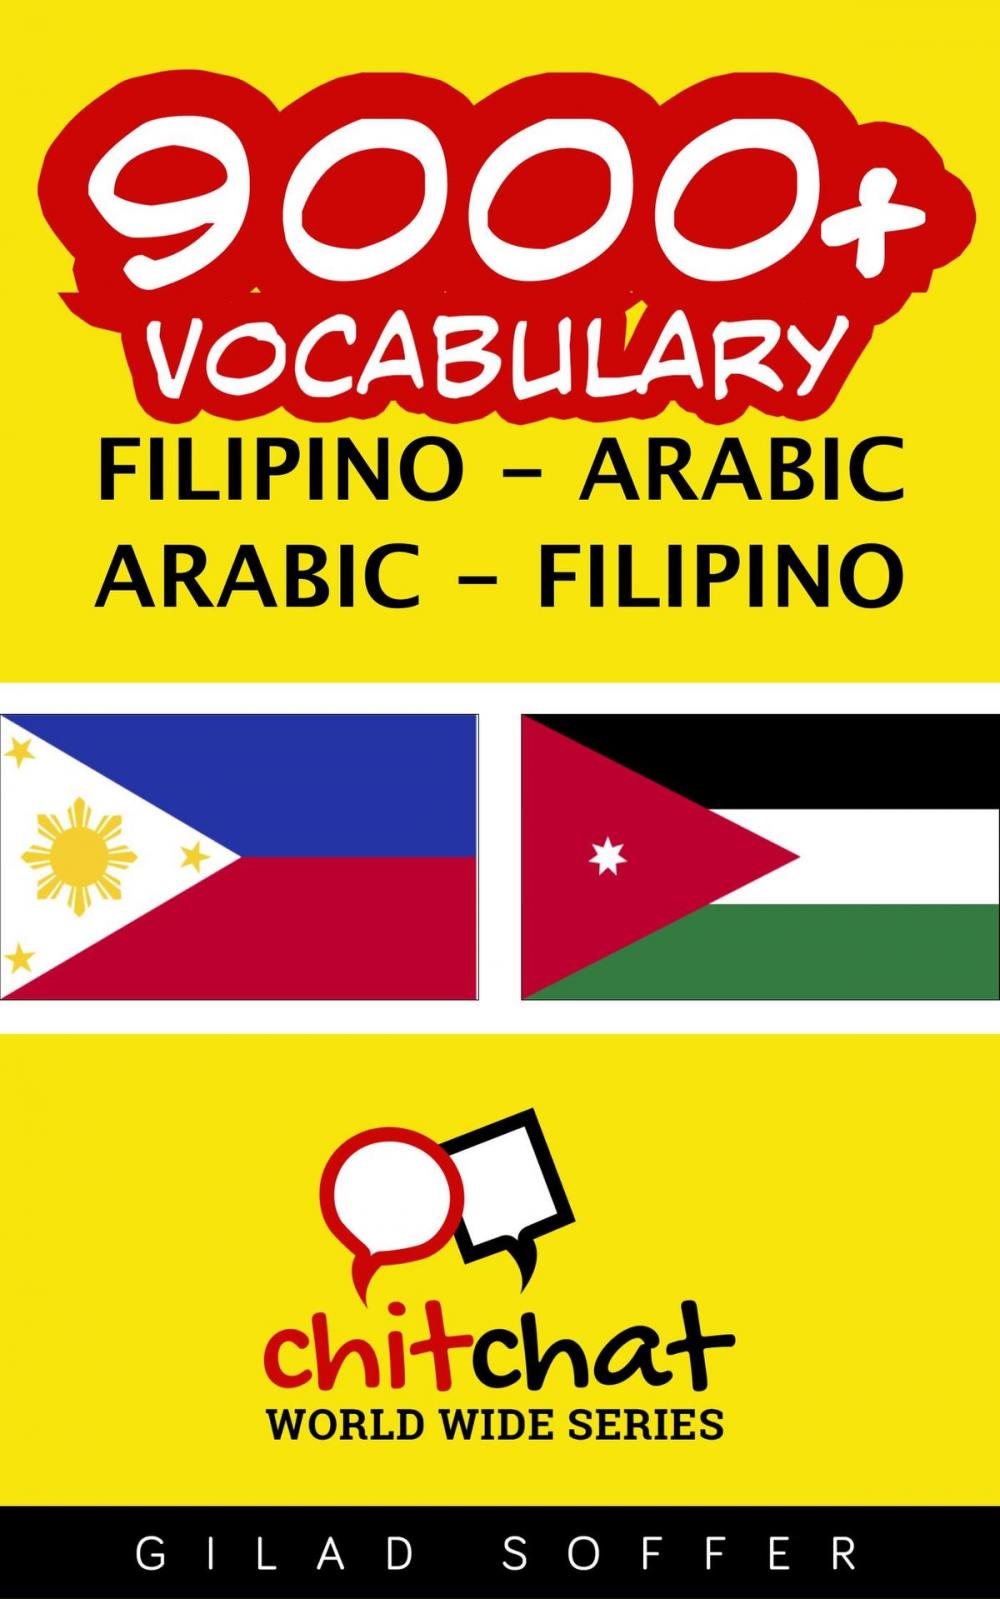 Big bigCover of 9000+ Vocabulary Filipino - Arabic